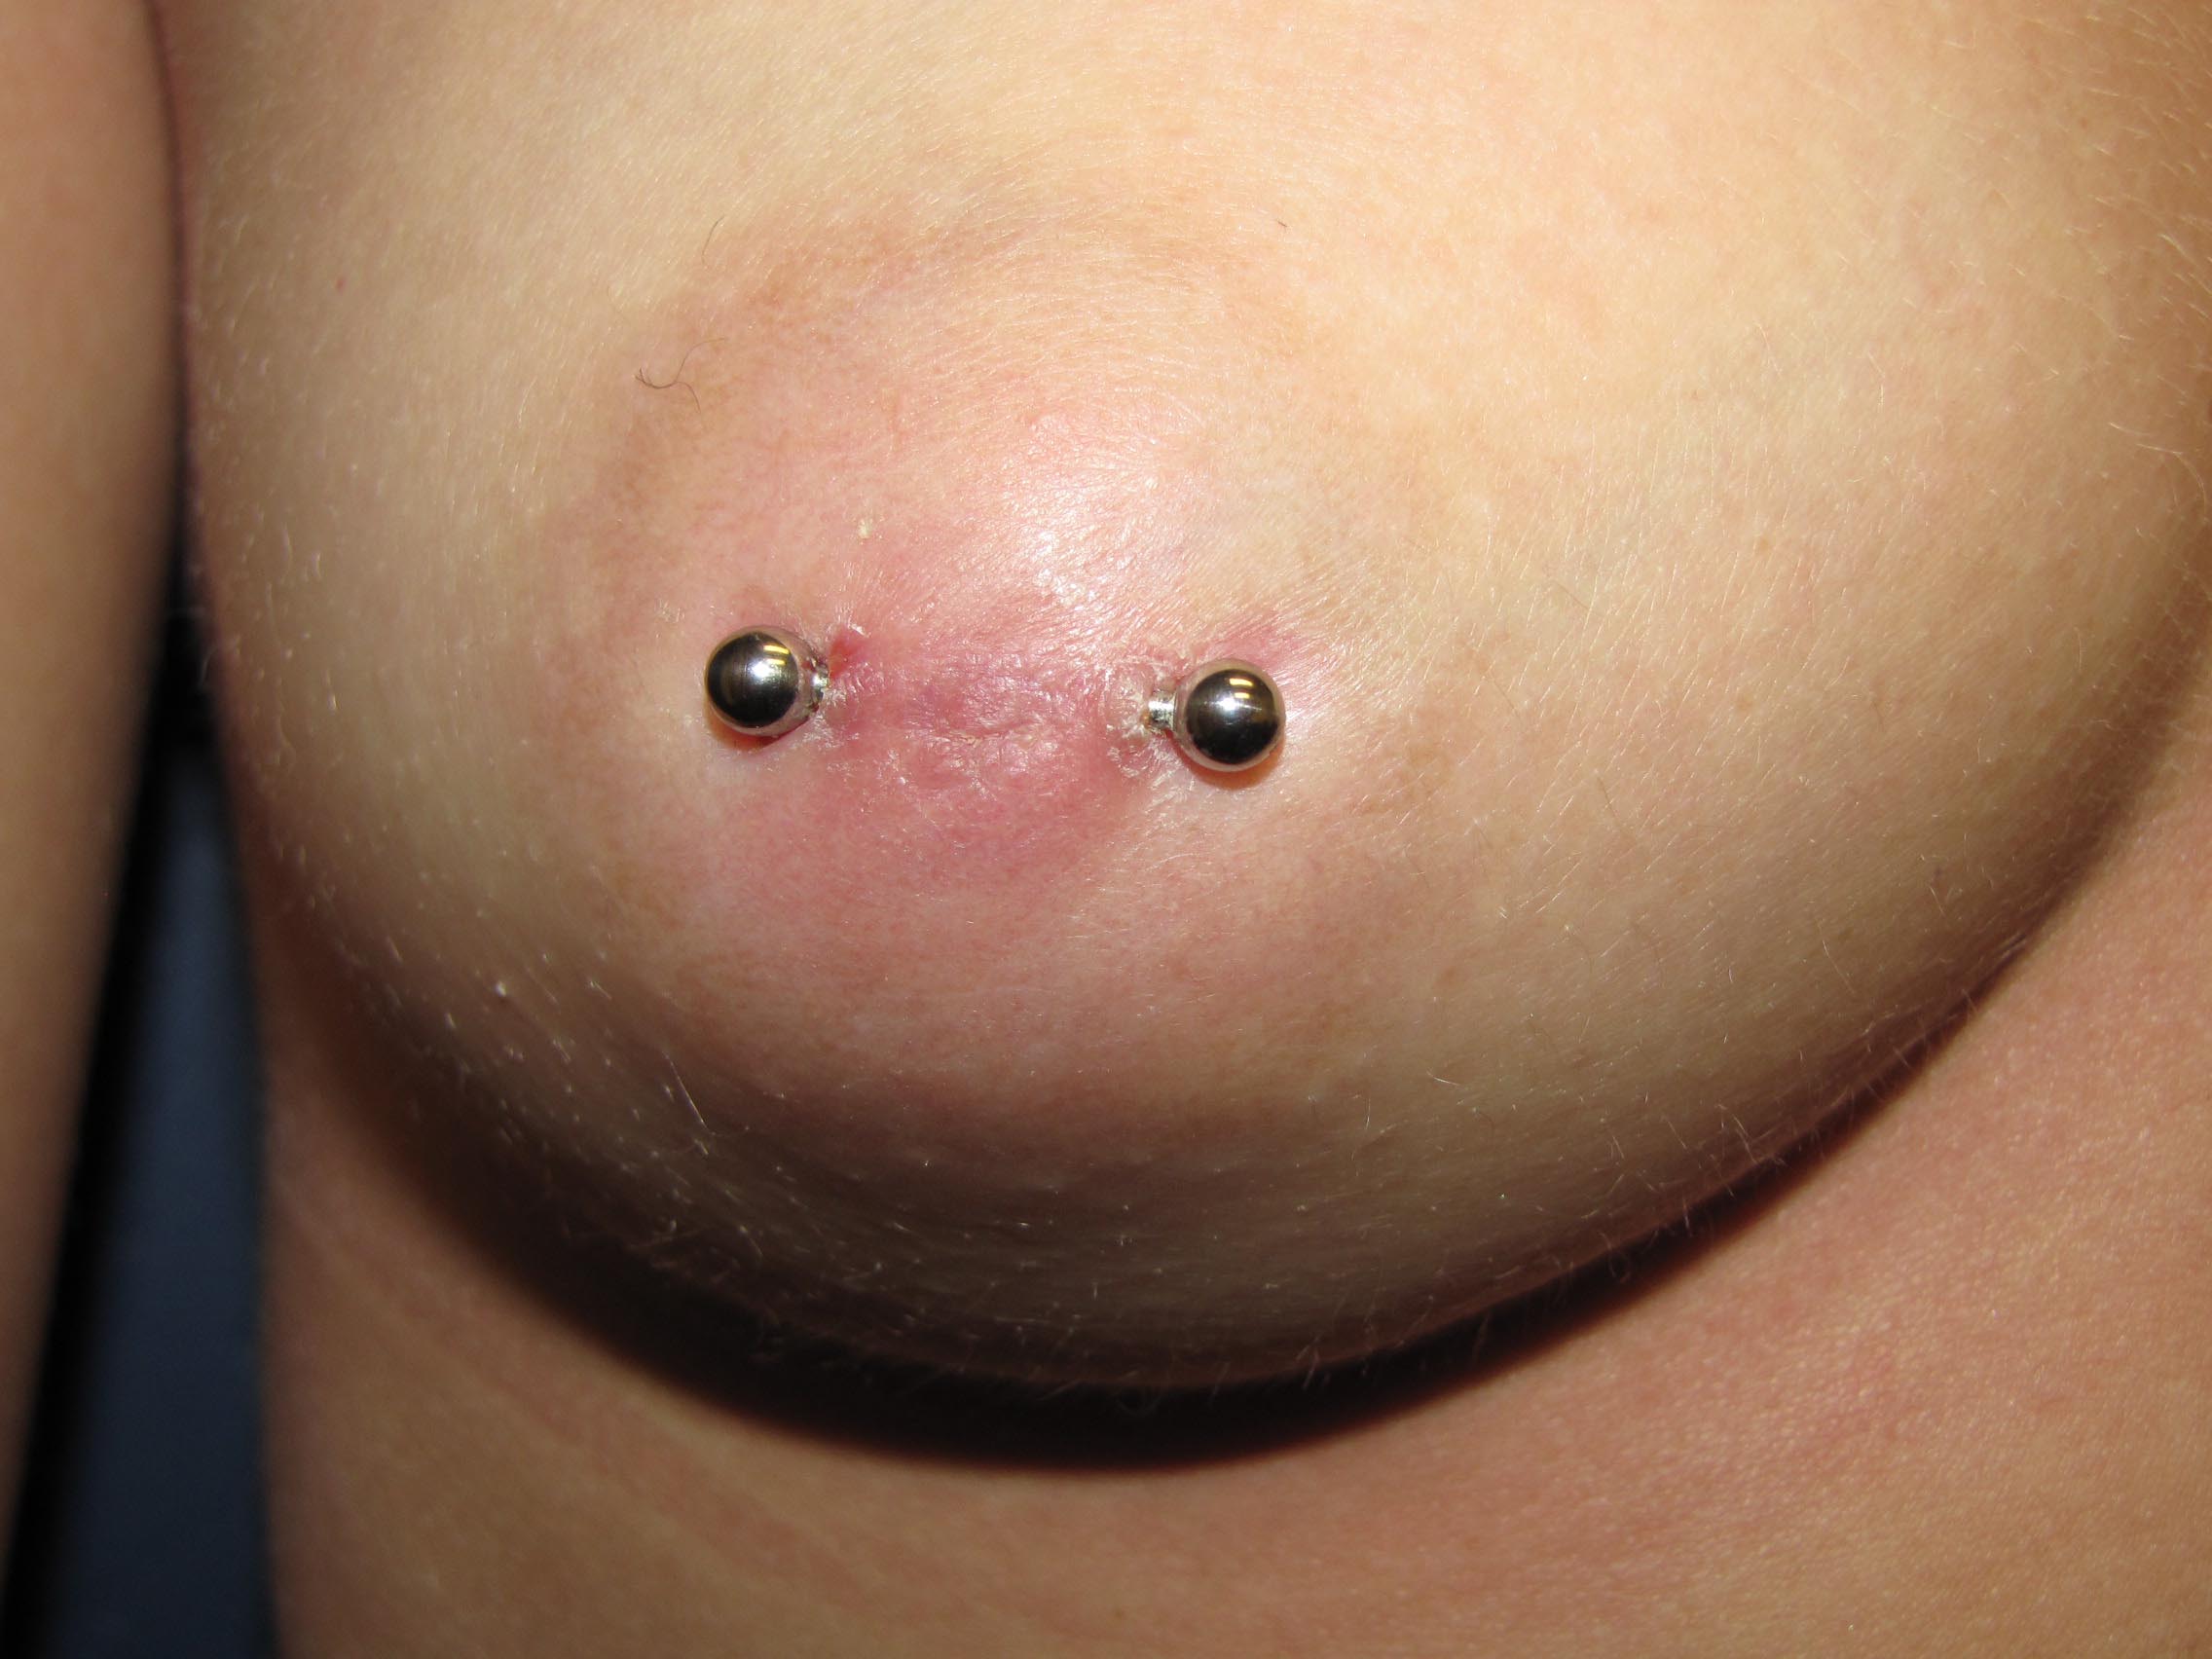 C.) Pierced inverted right nipple.